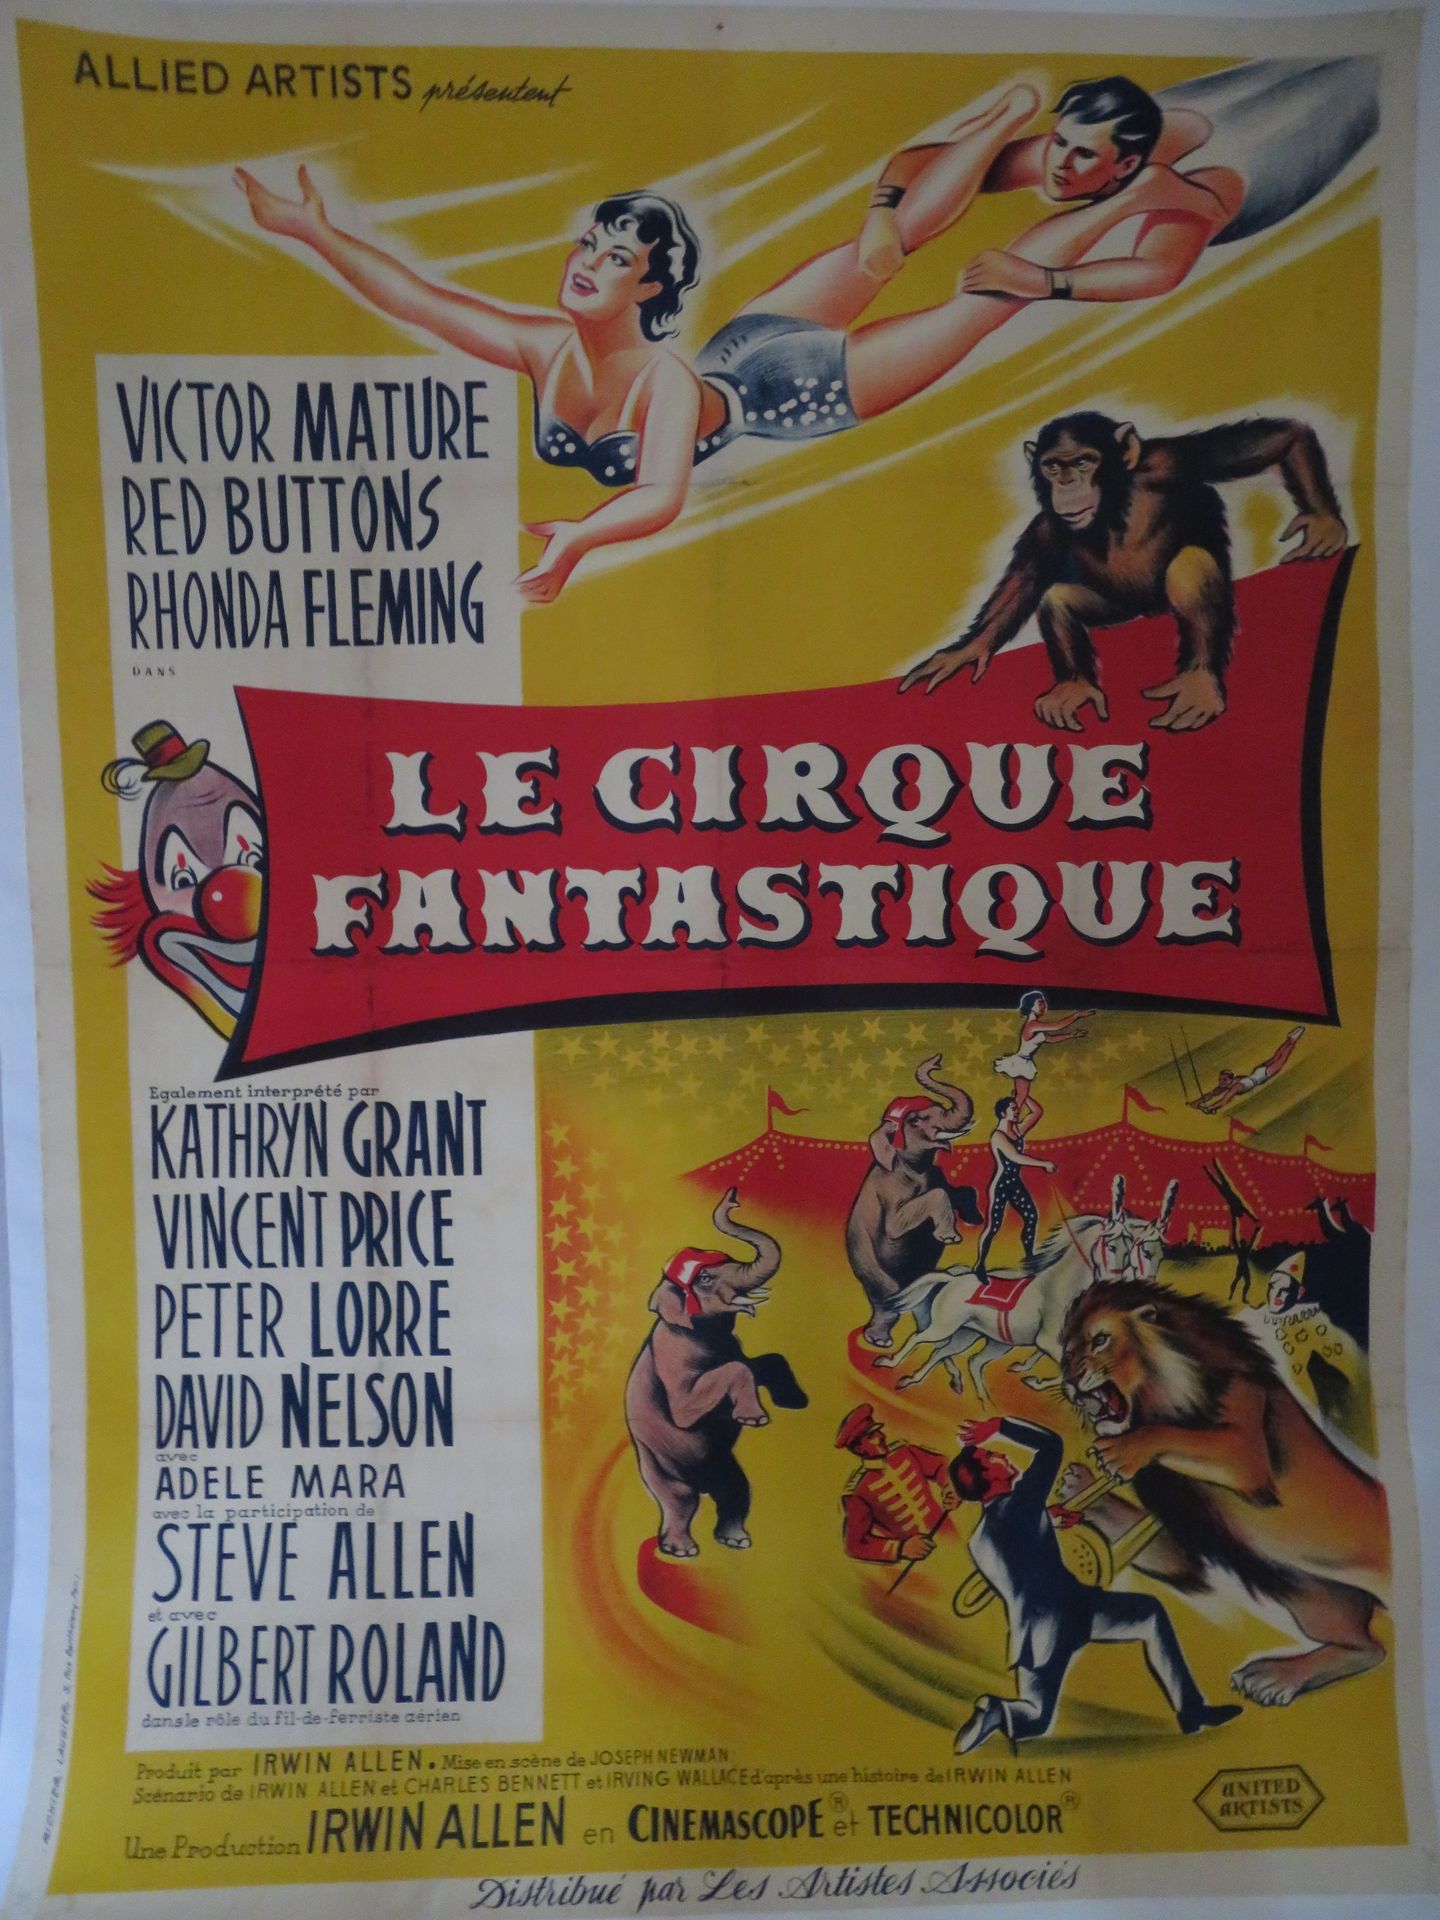 Null " LE CIRQUE FANTASTIQUE " (1959) von Joseph NEWMAN mit Victor Mature, Rhond&hellip;